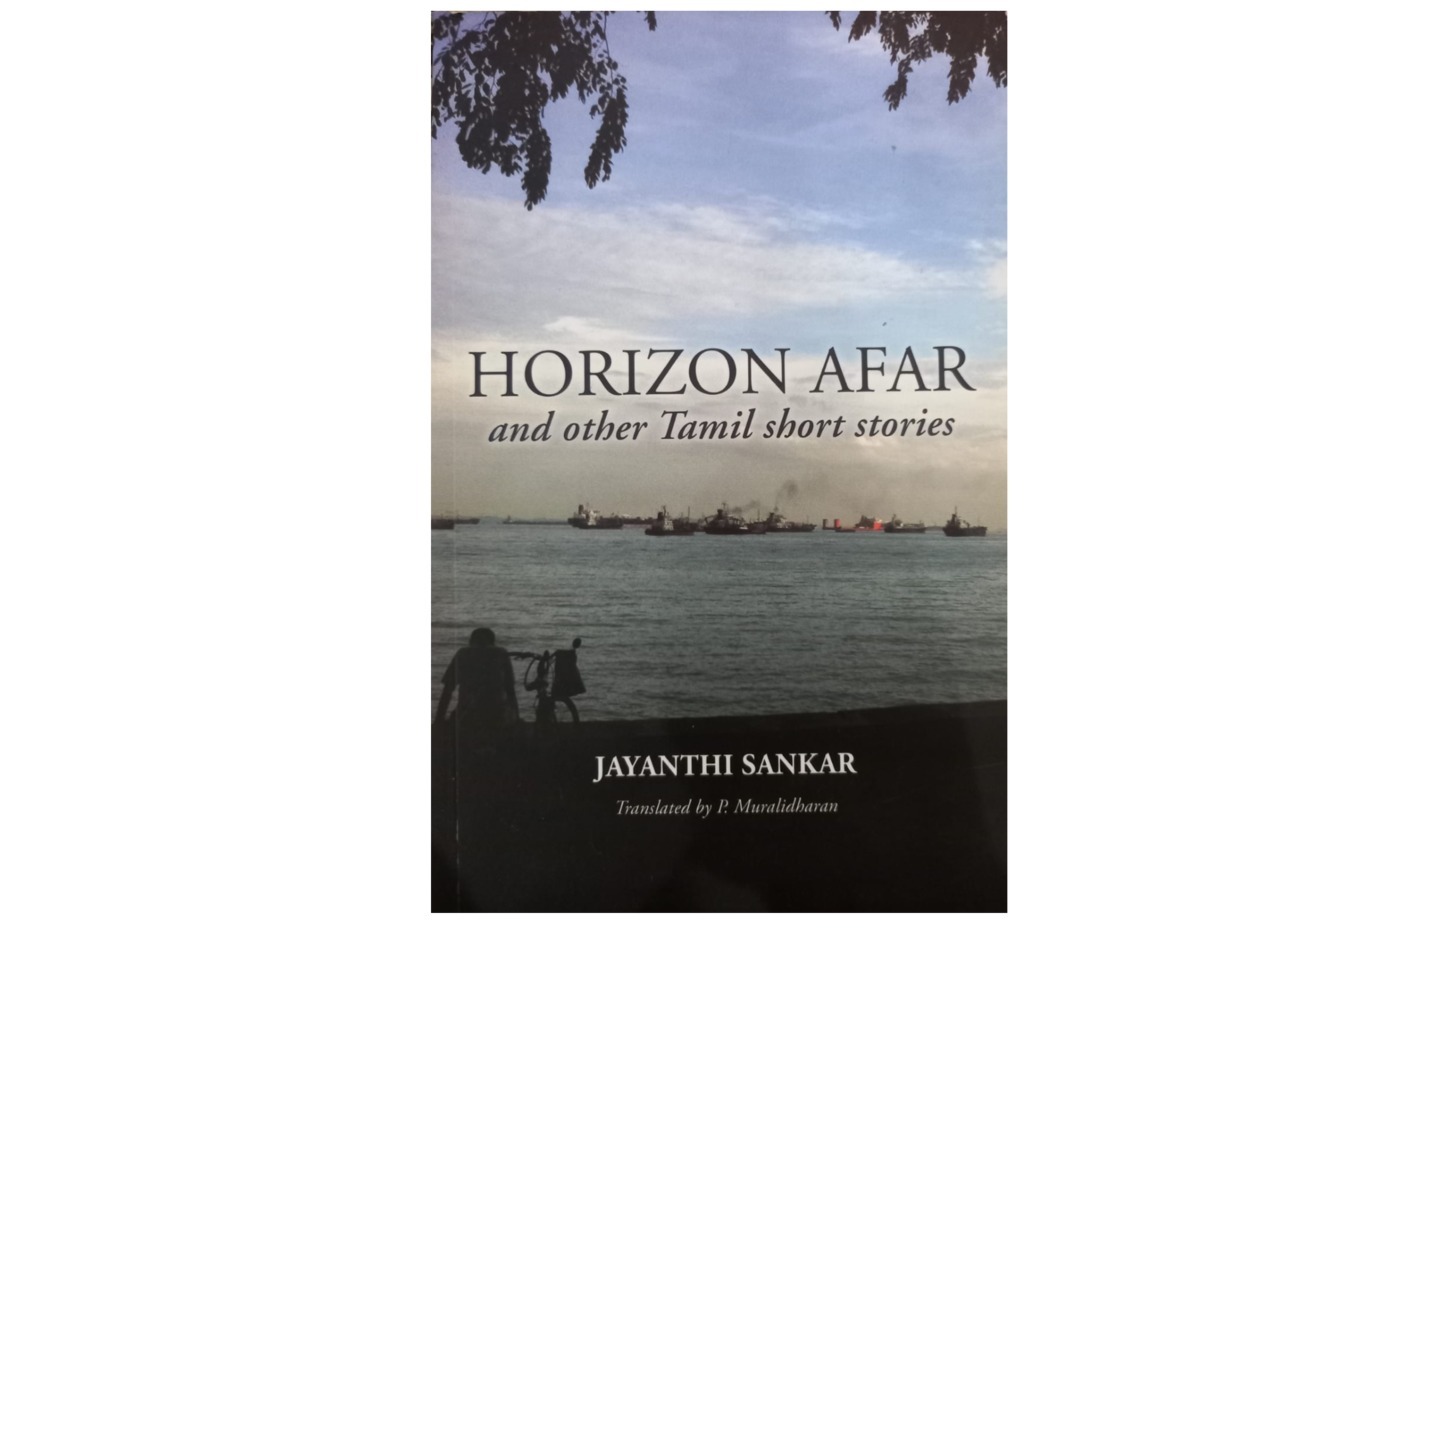 Horizon Afar and Other Tamil Short Stories by Jayanthi Sankar